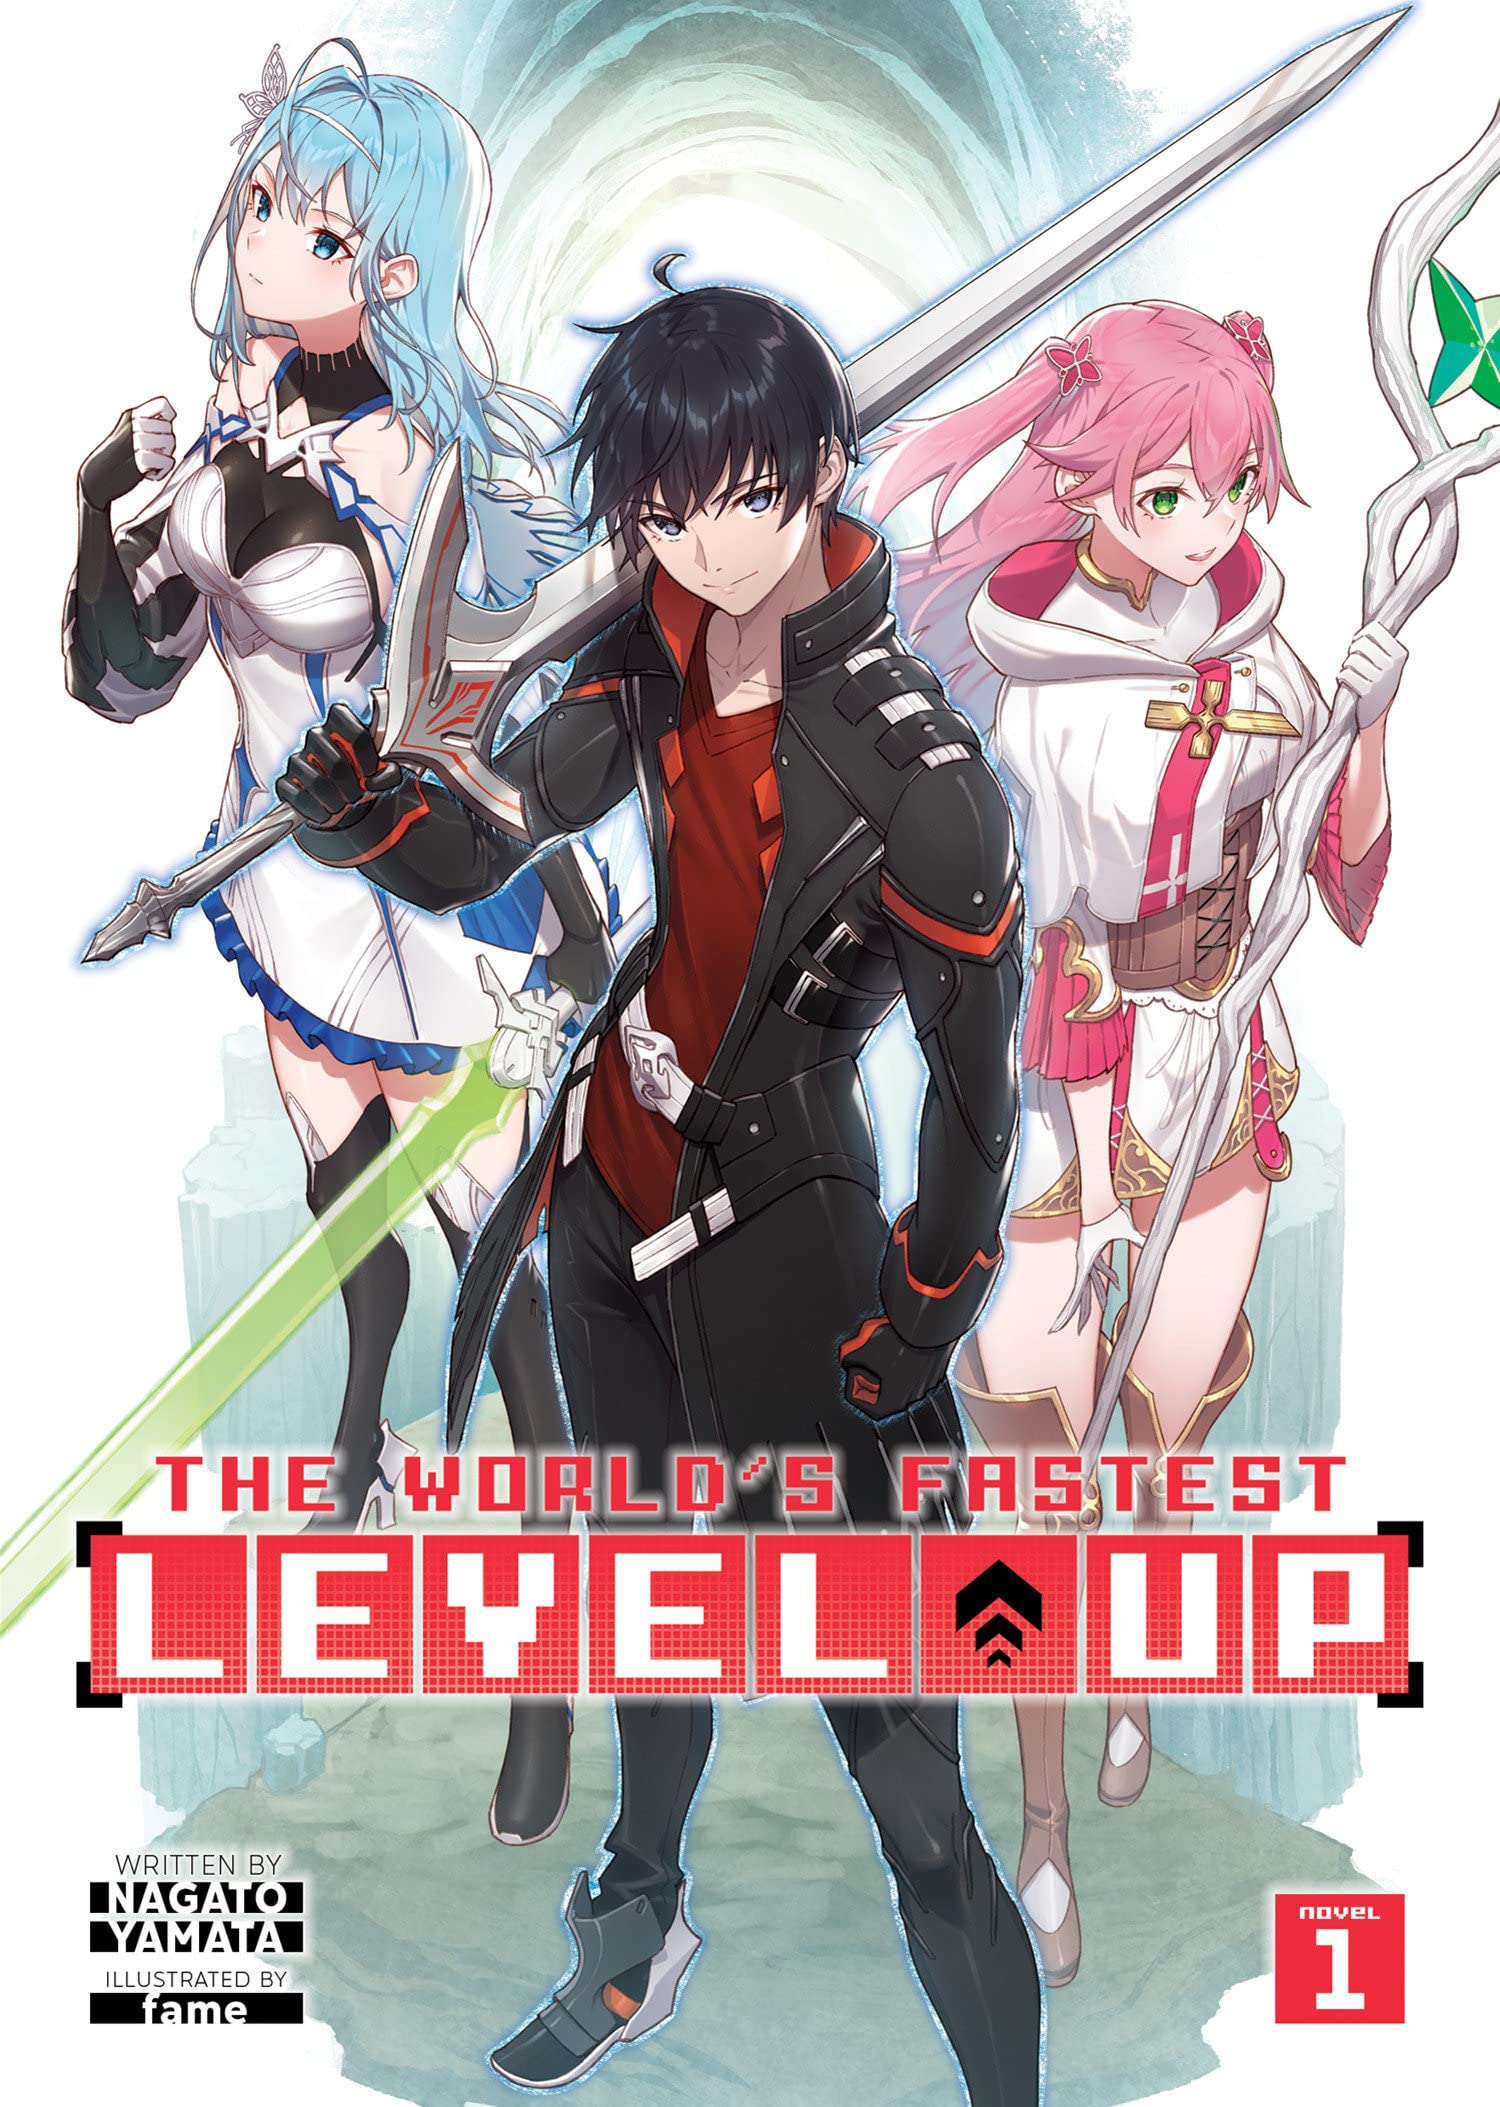 The World's Fastest Level Up (Light Novel) Vol. 01